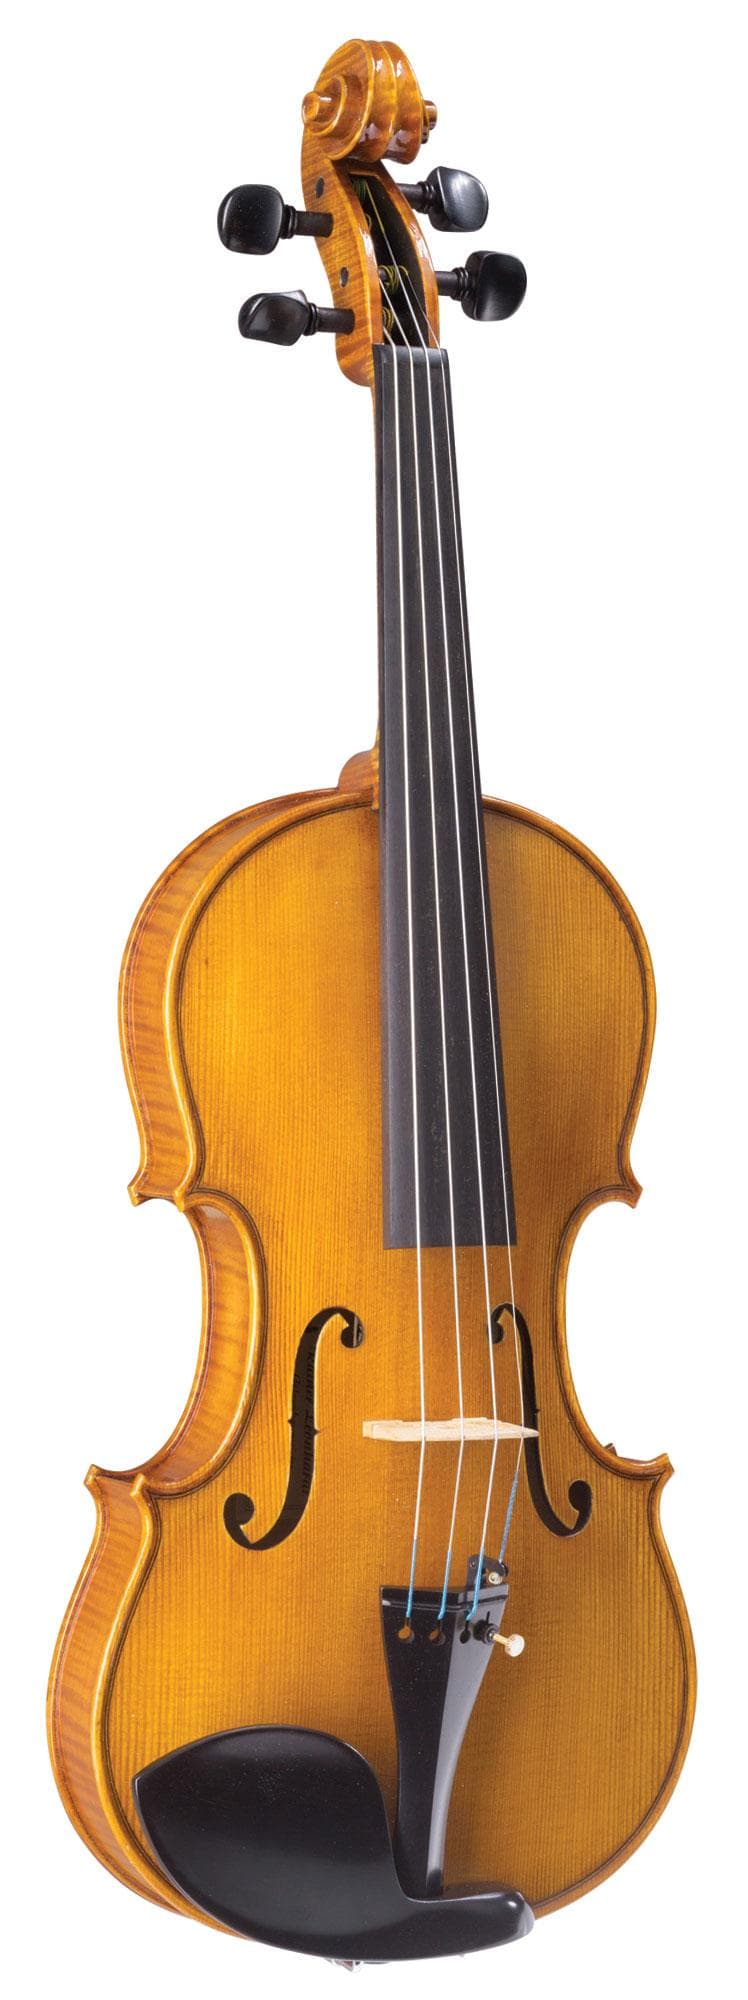 Rainer Leonhardt Violin, No. 95 - 4/4 size